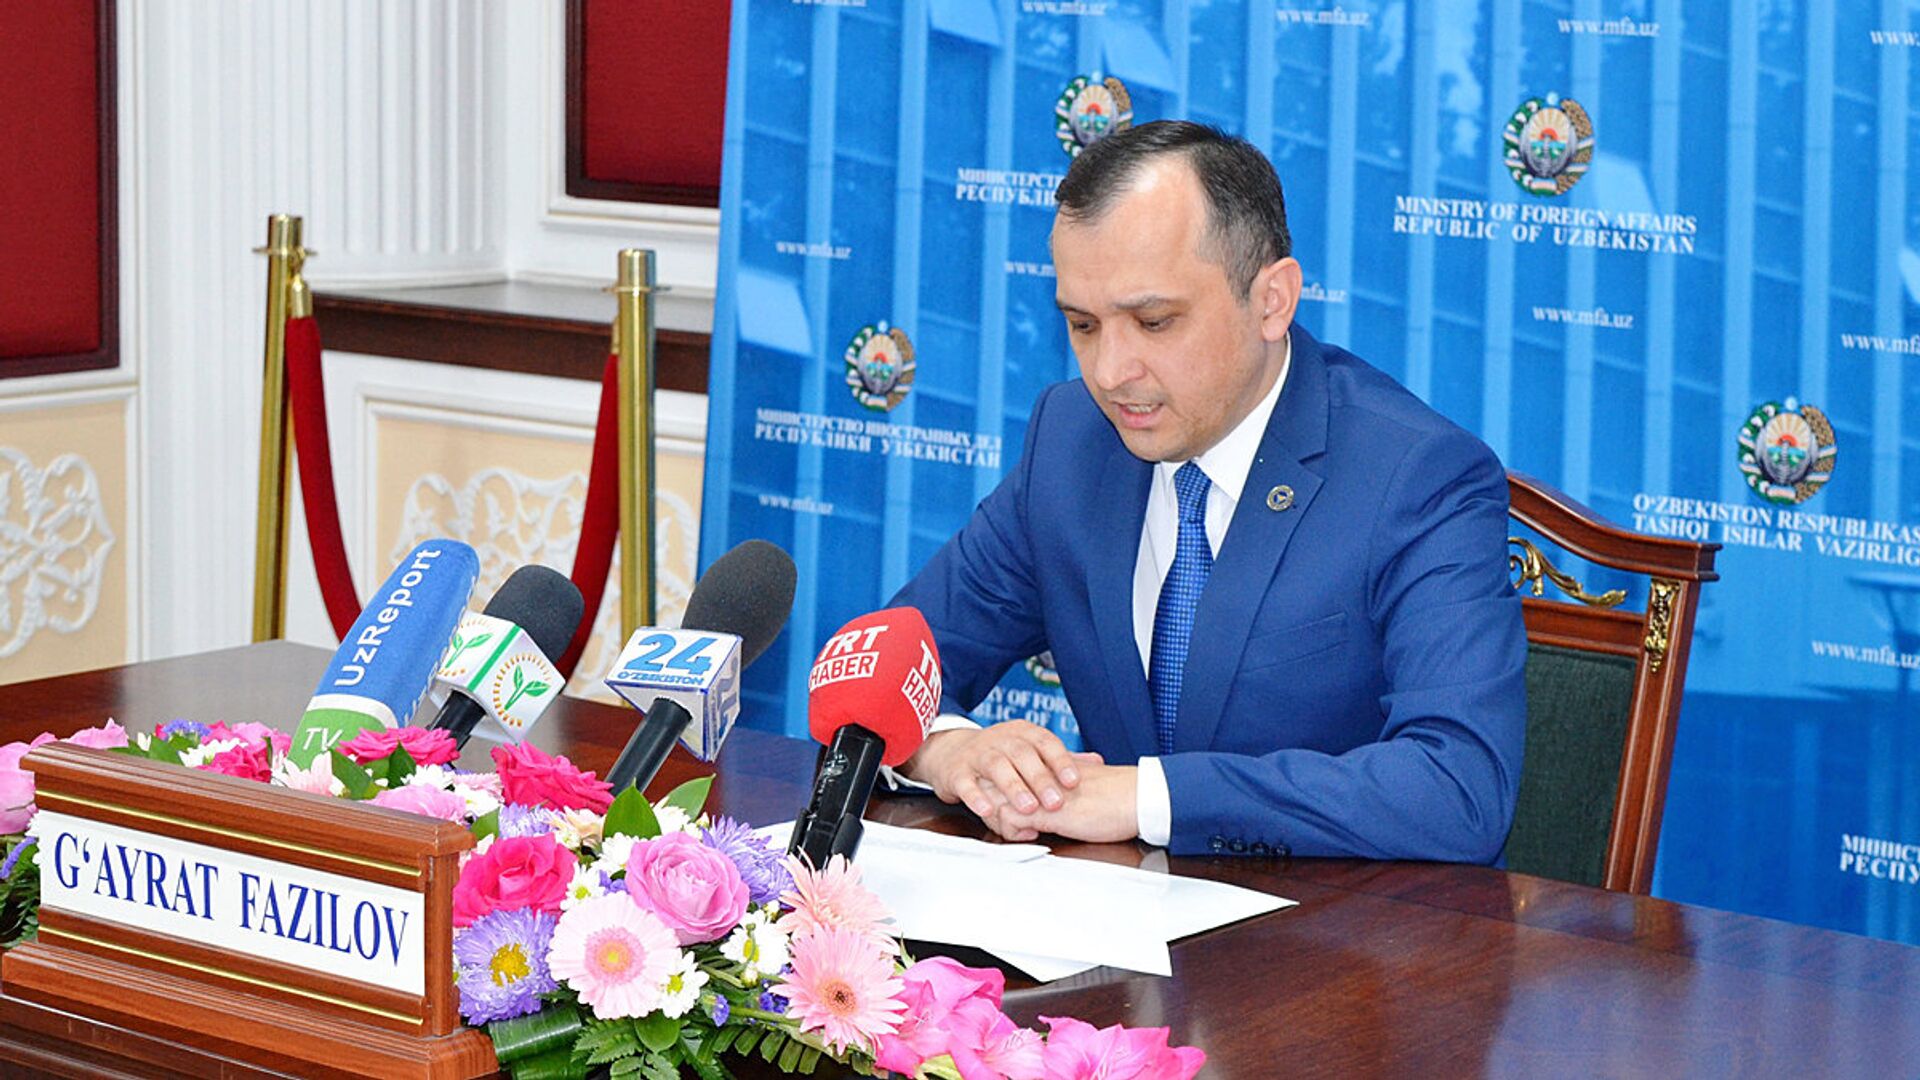 Zamestitel ministra inostrannыx del Respubliki Uzbekistan Gayrat Fazilov - Sputnik Oʻzbekiston, 1920, 08.04.2021